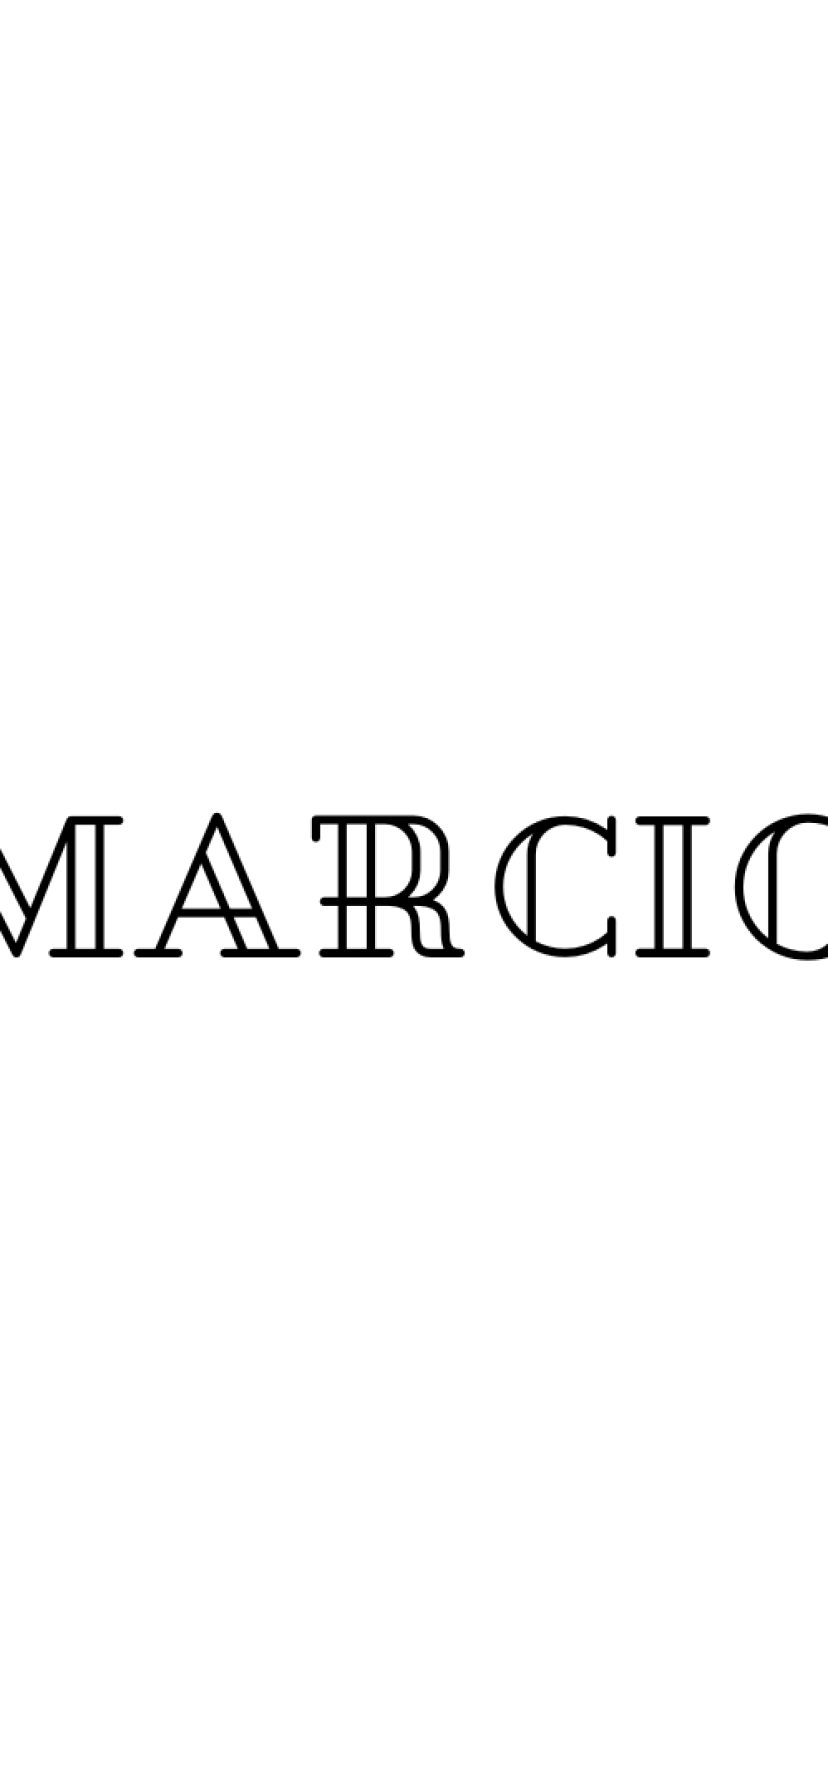 Marcio.co domain name for sale